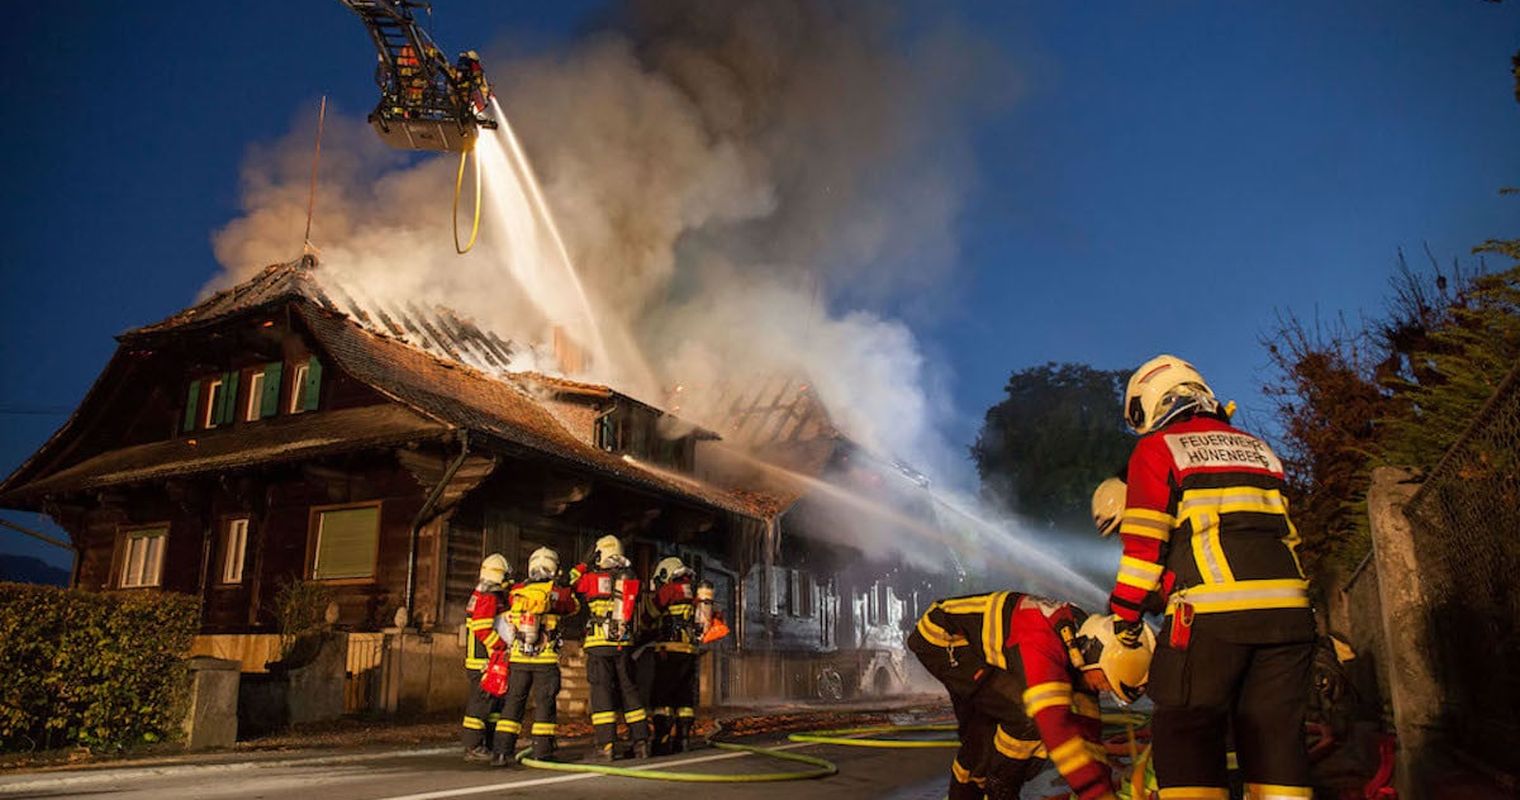 Zug: Kampf gegen Feuerwehrsteuer geht in nächste Runde